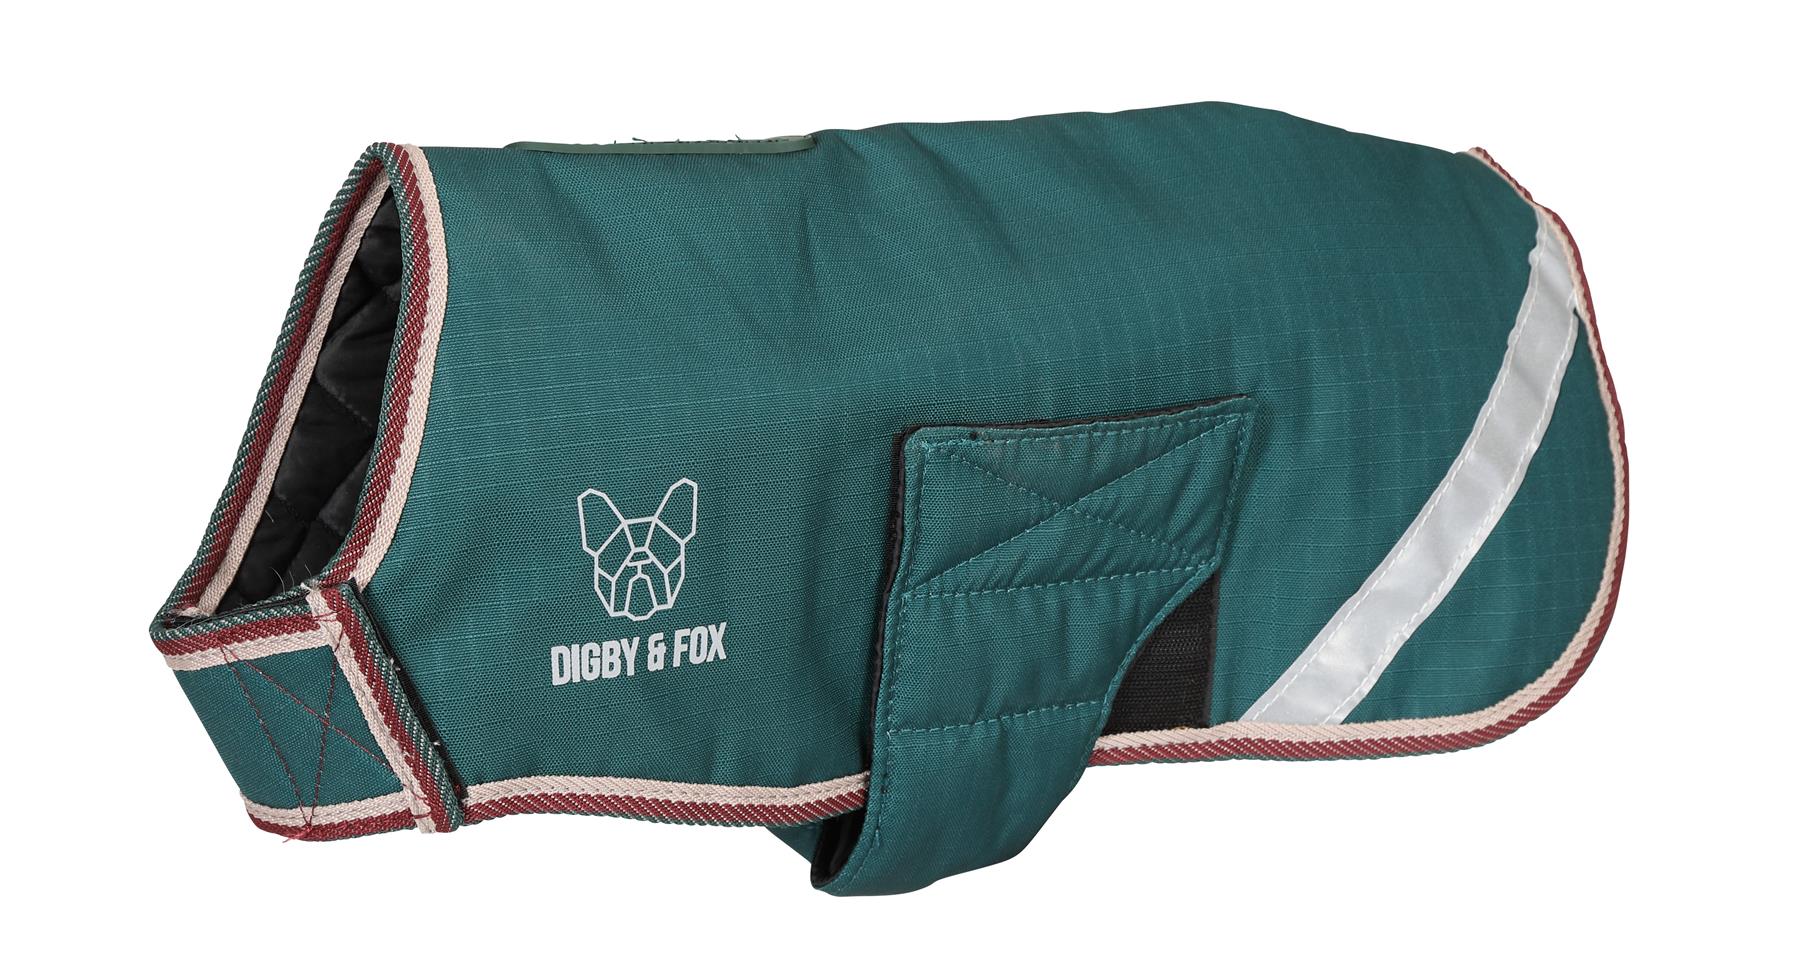 Digby & Fox Waterproof Dog Coat - Just Horse Riders